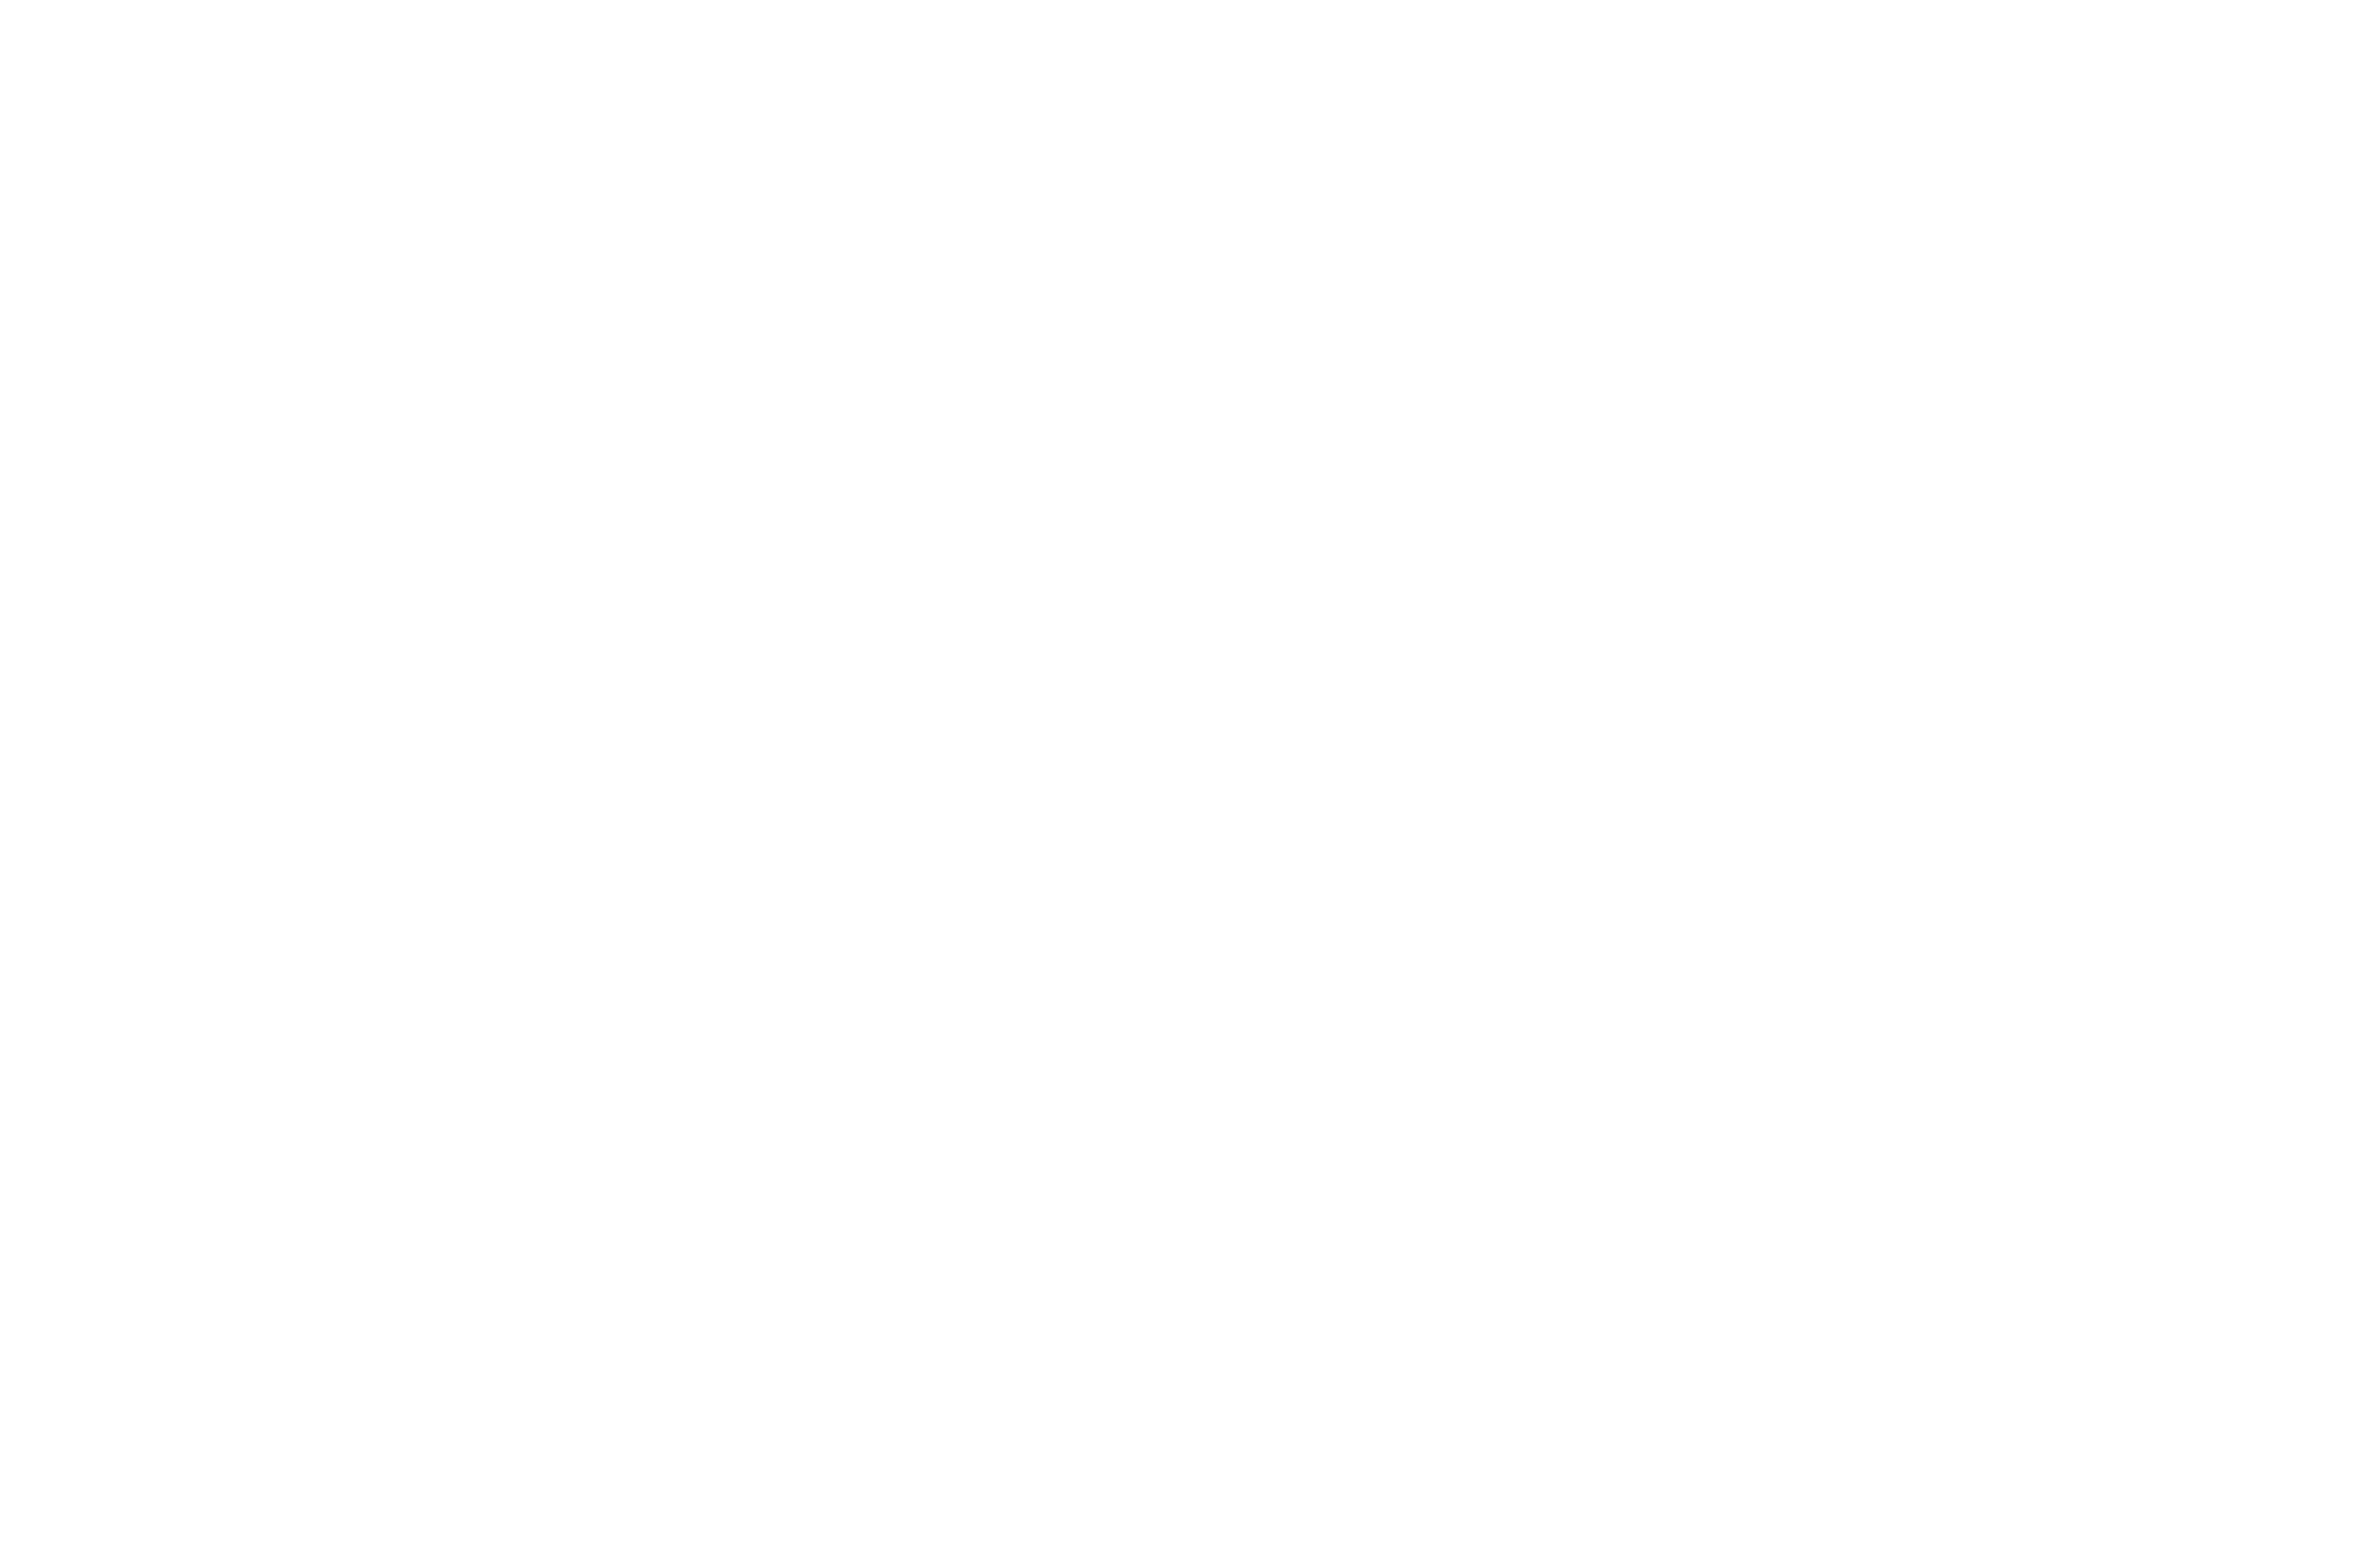 Southern Holiday Homes